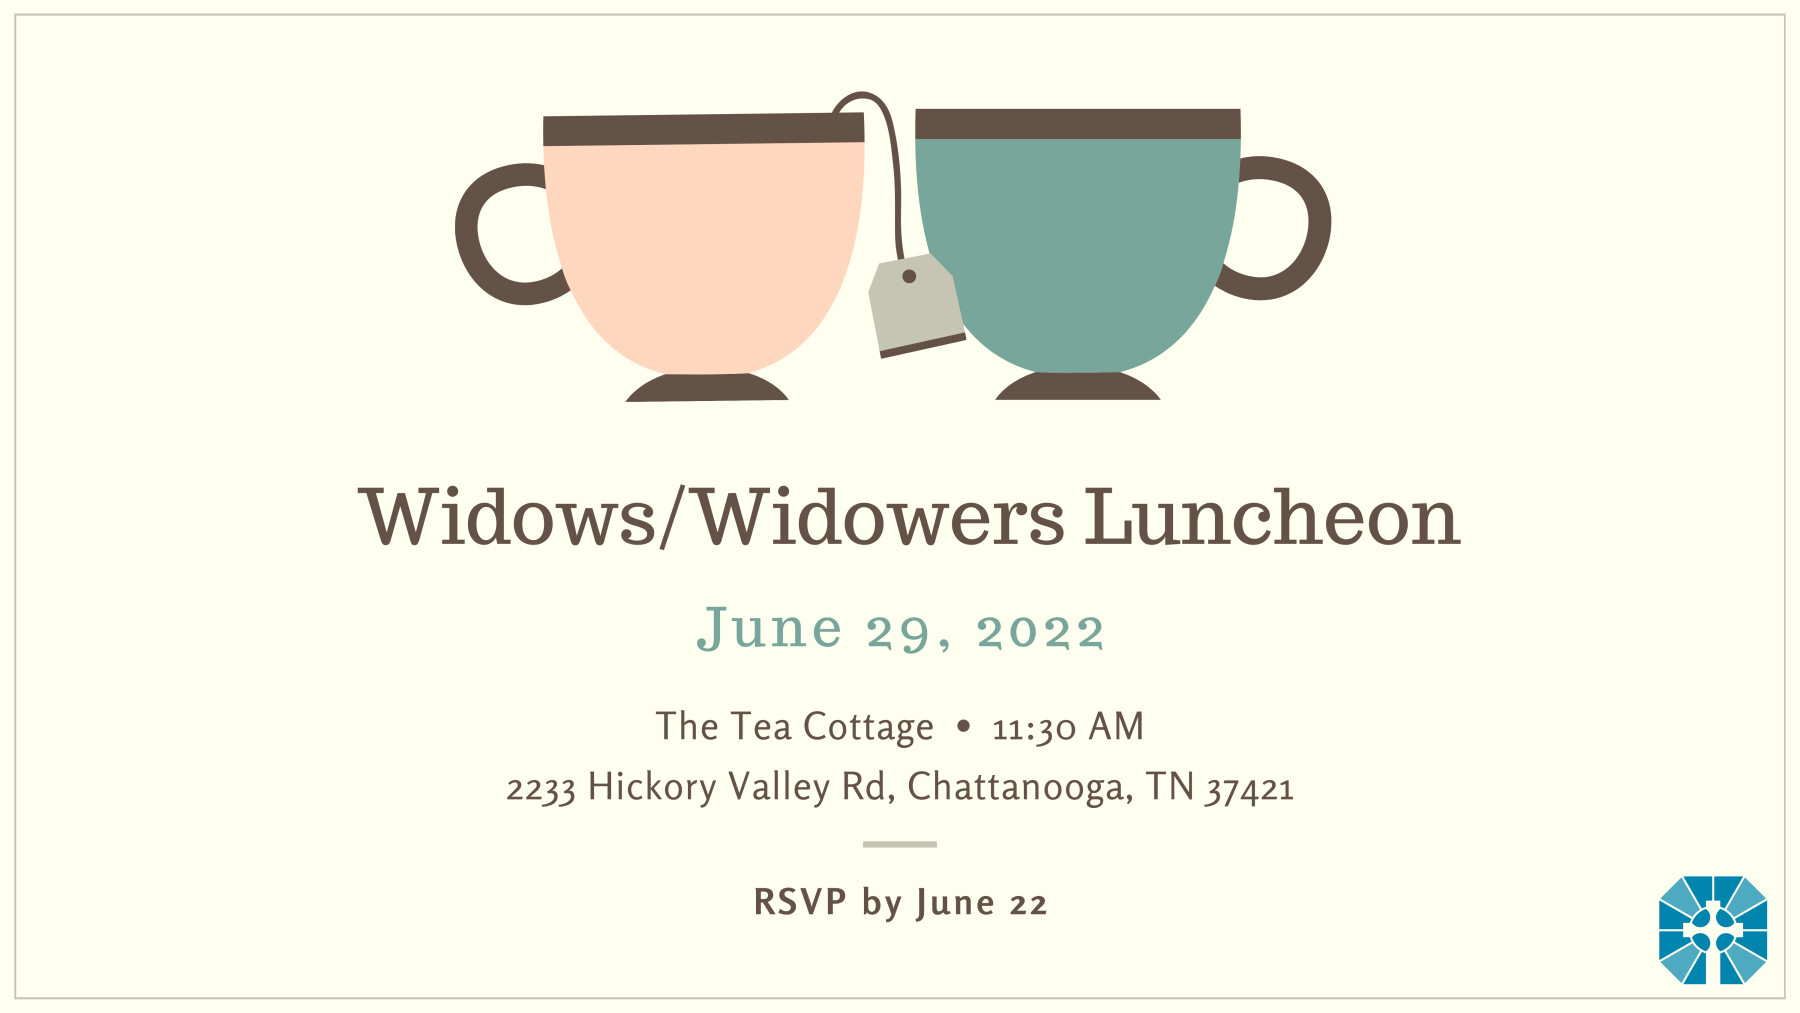 Widows/Widowers Luncheon